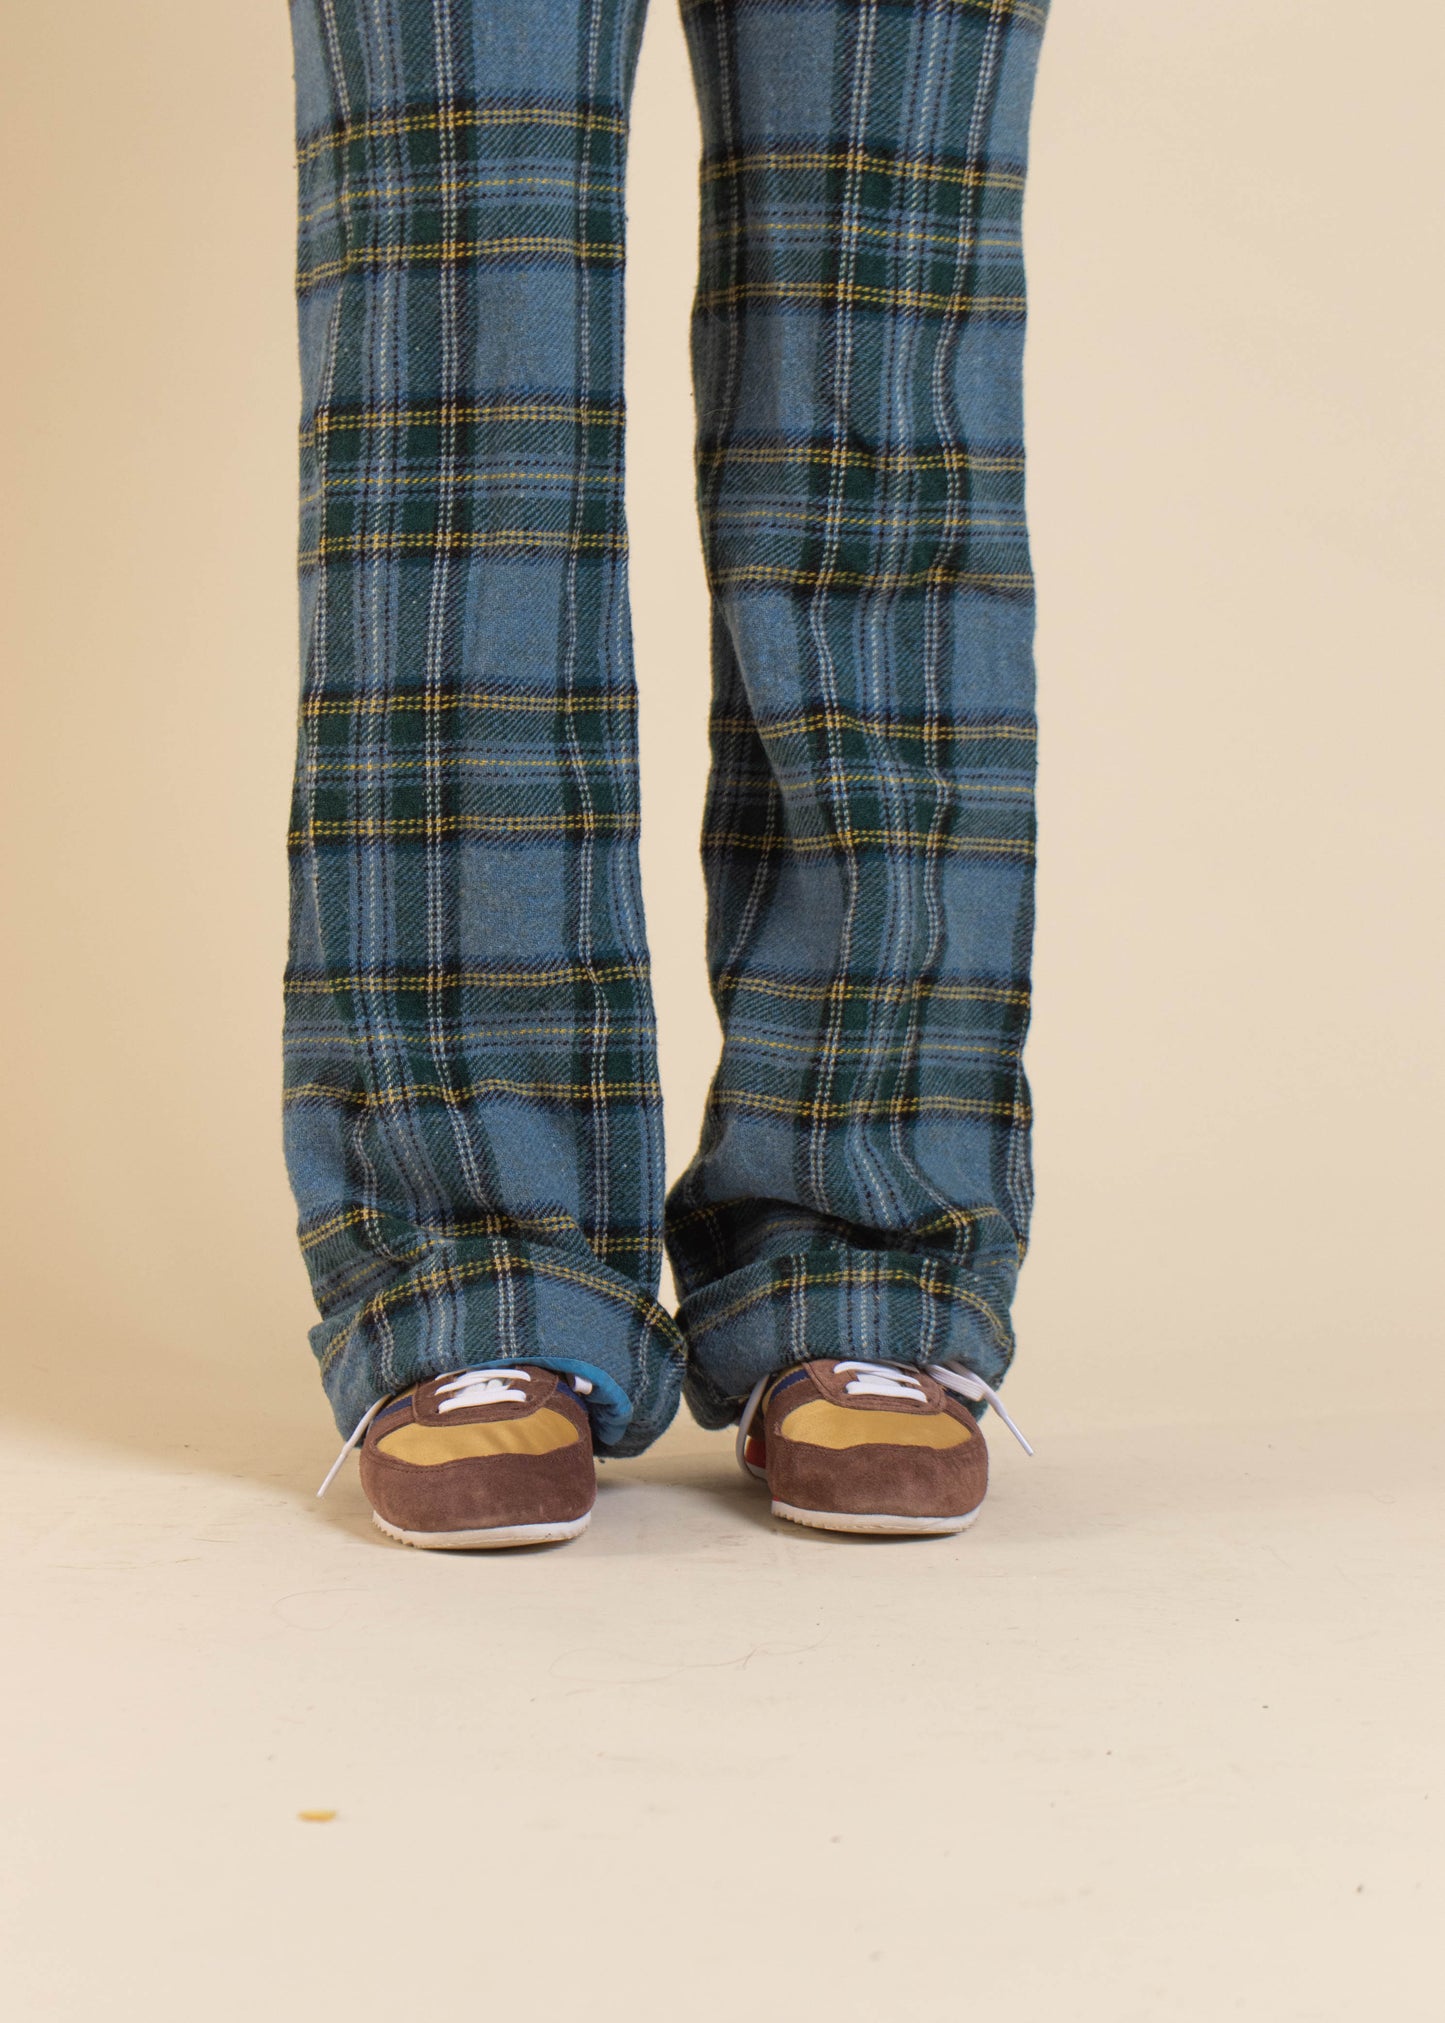 1970s Plaid Pattern Wool Trouser Pants Size Women's 25 Men's 28